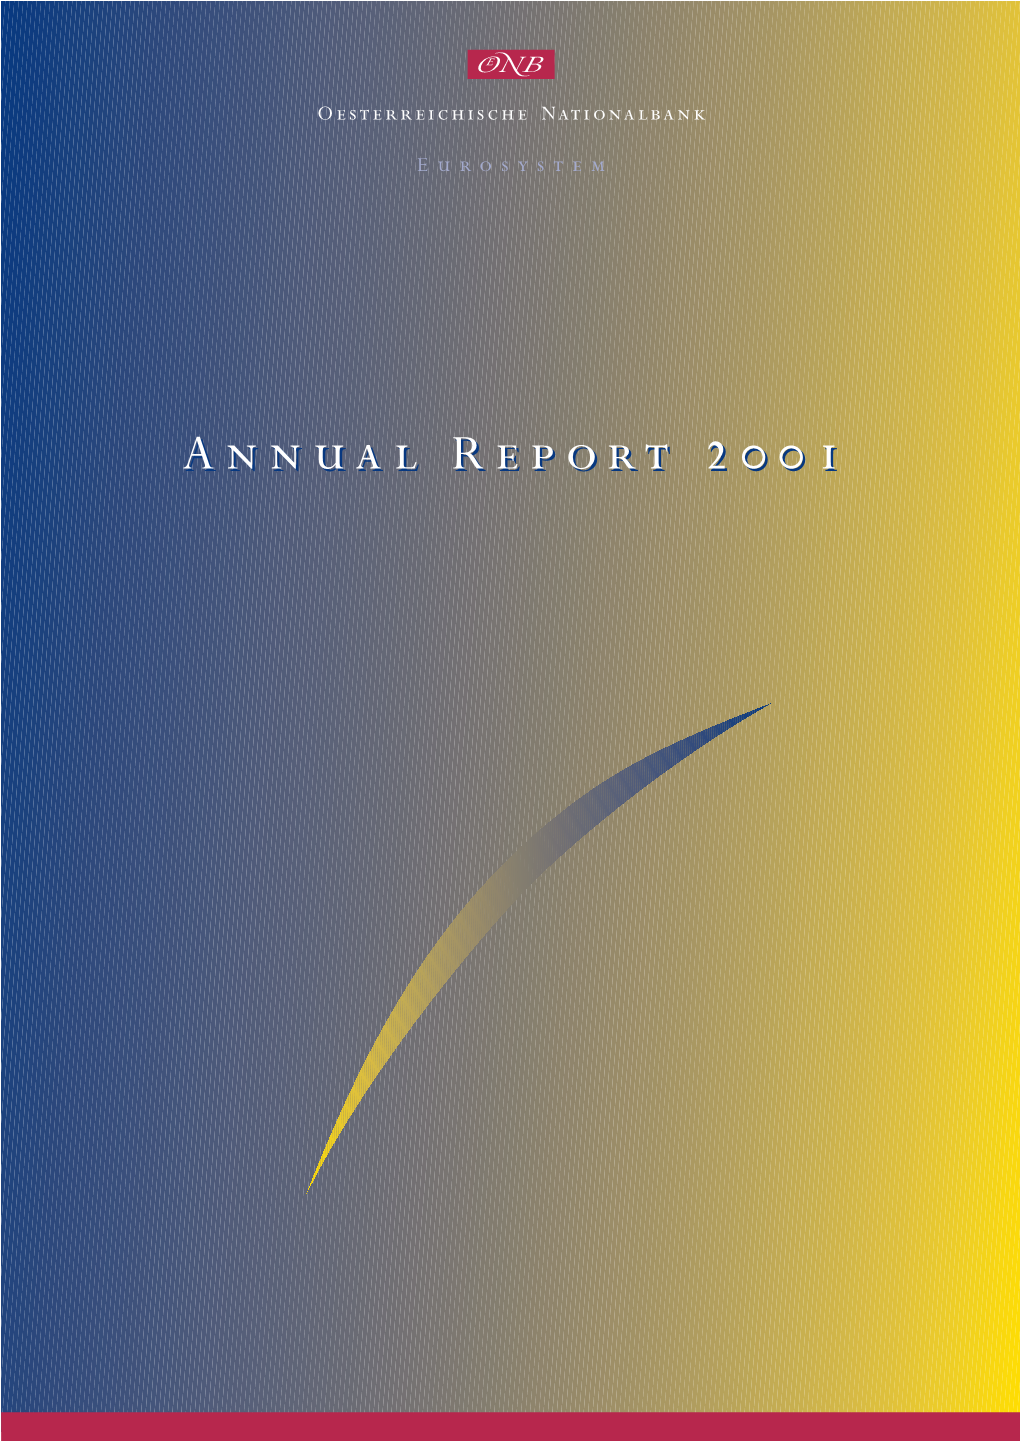 Annual Report 2001 Statement